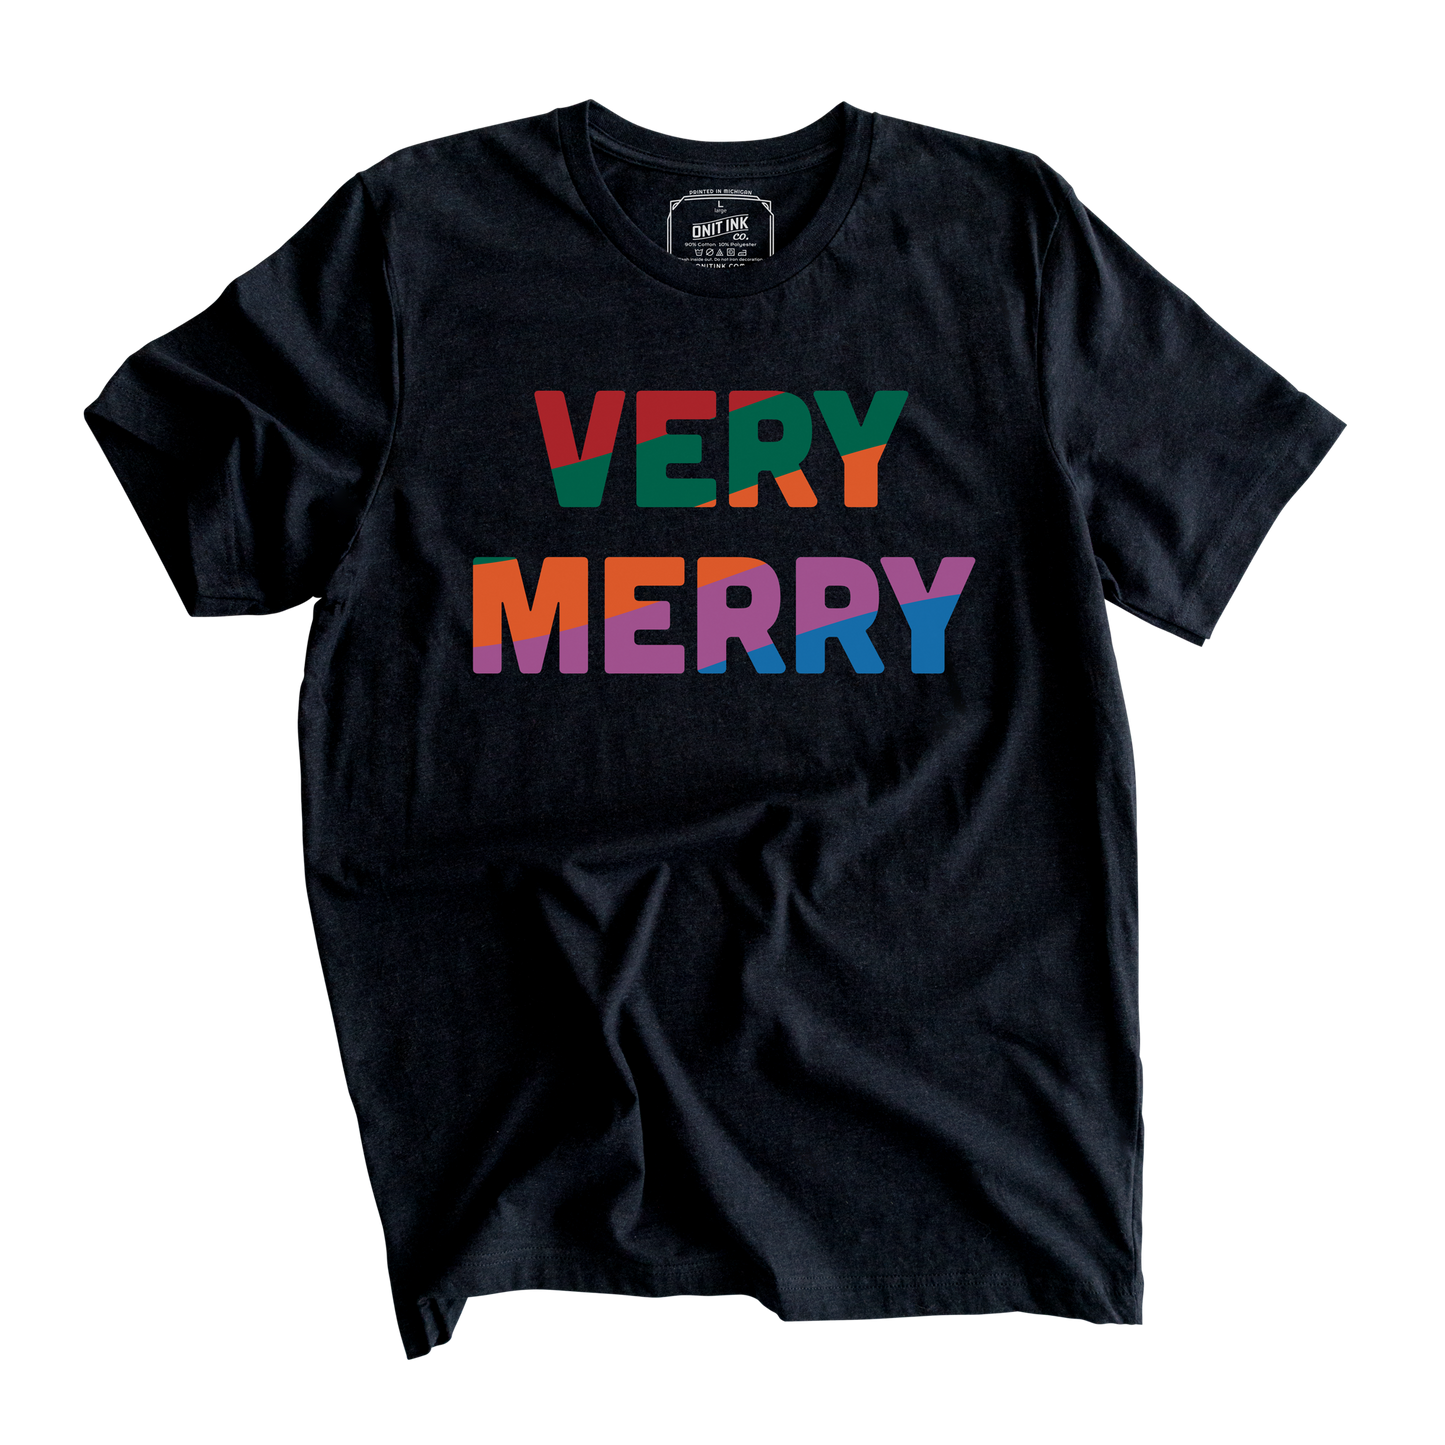 Very Merry T-Shirt